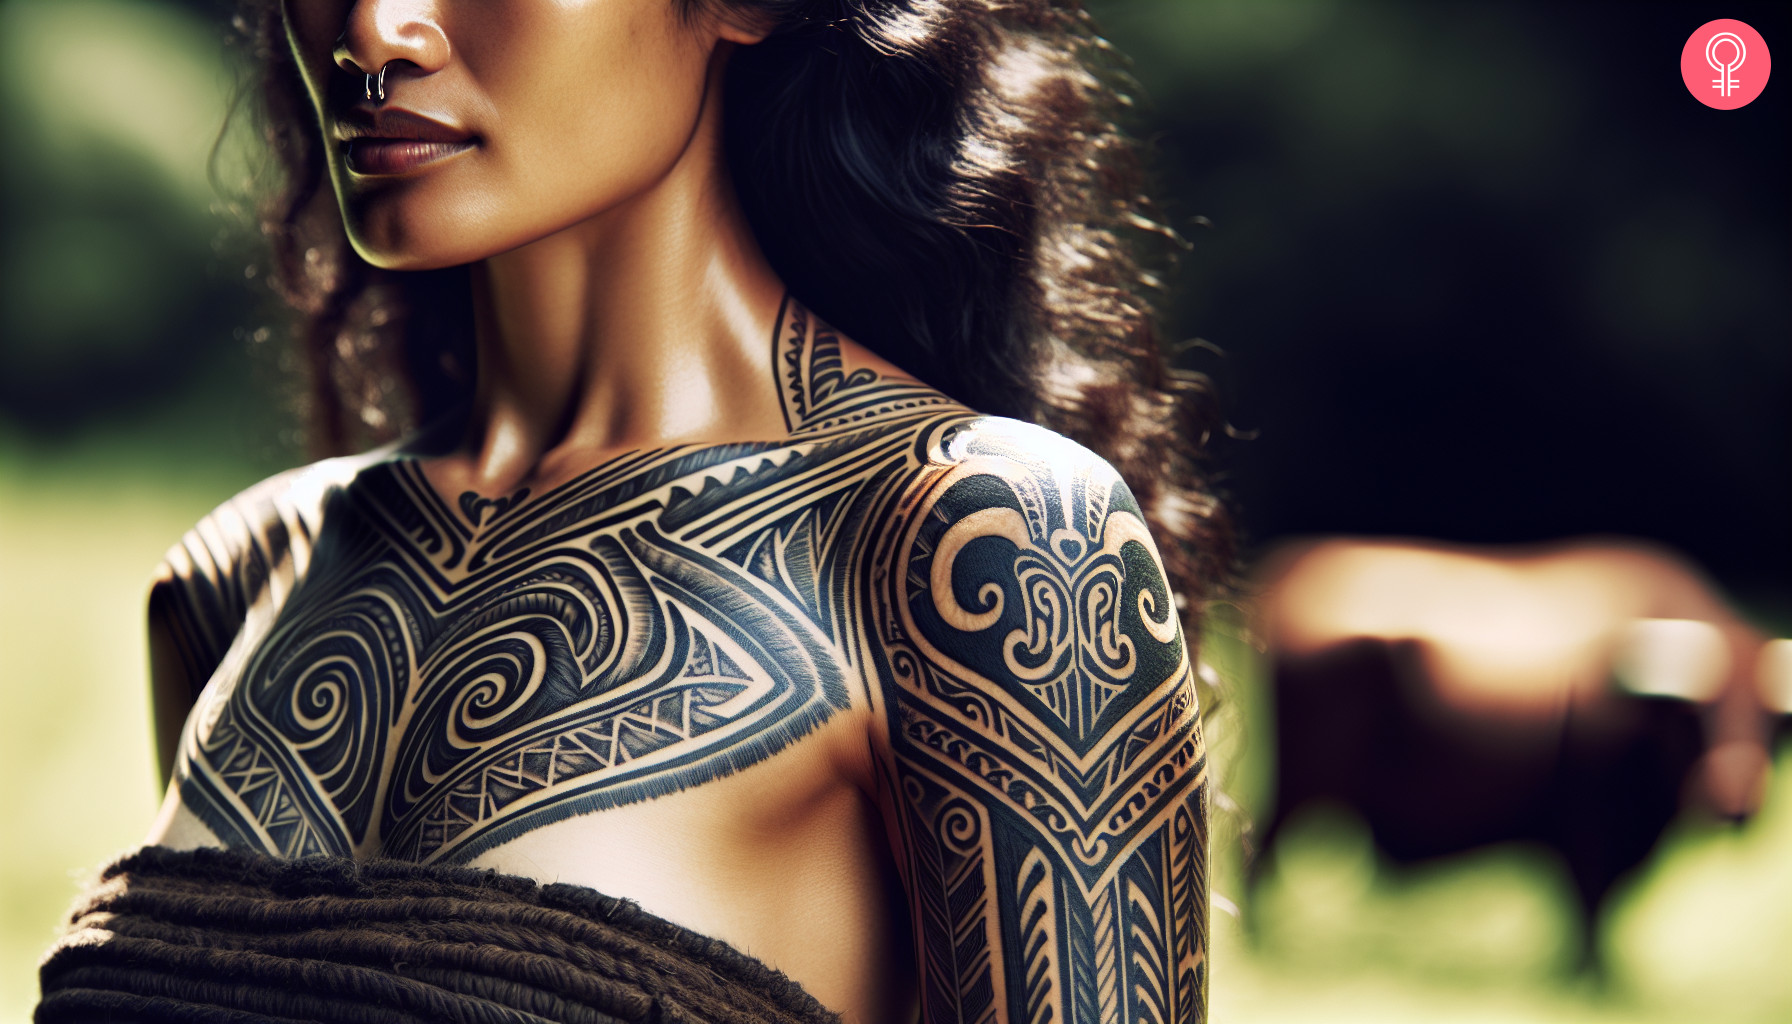 Bull manawa ta moko tattoo on the shoulder and upper arm of a woman